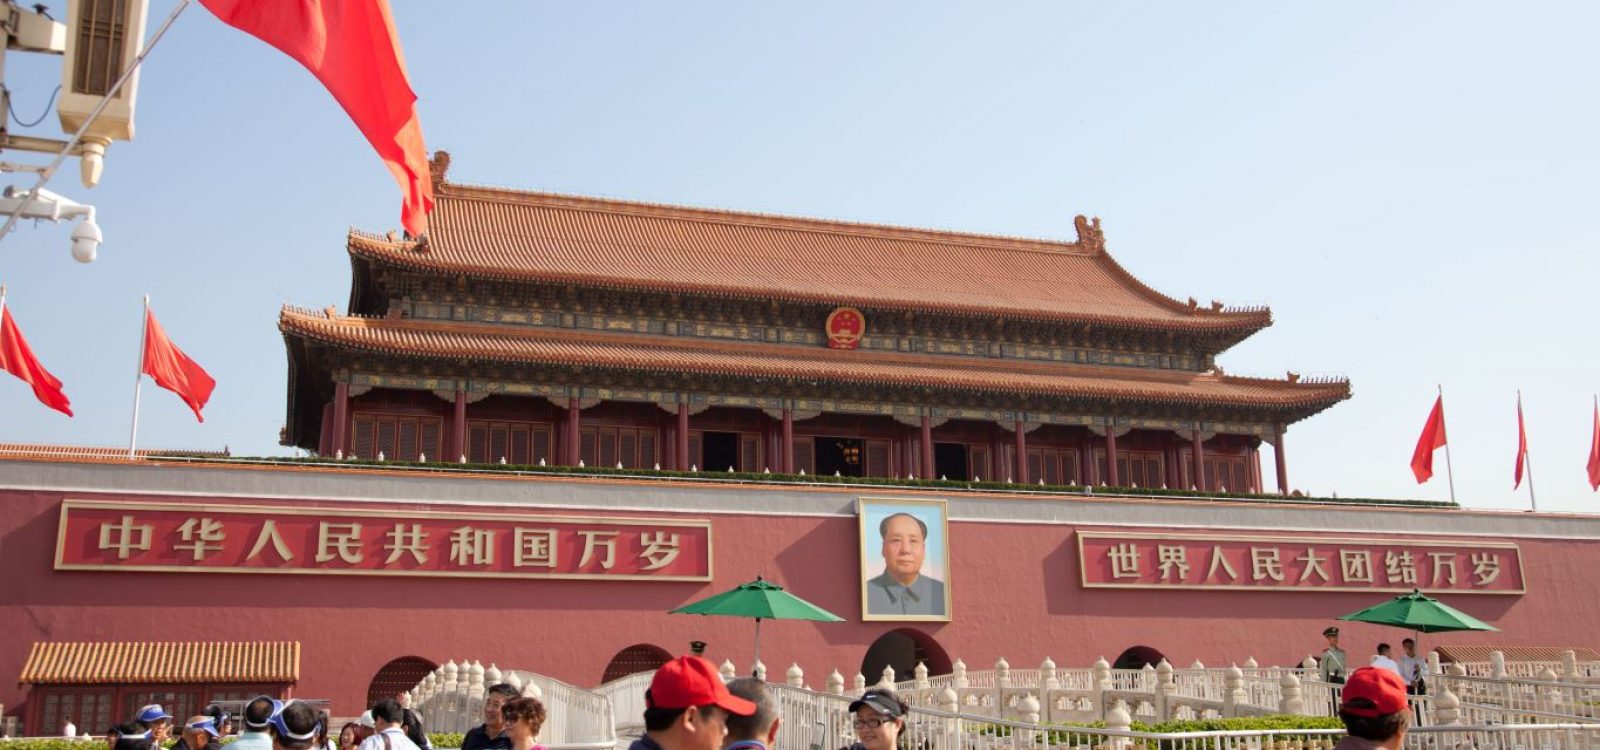 Actuaries in Asia – Beijing and Shanghai